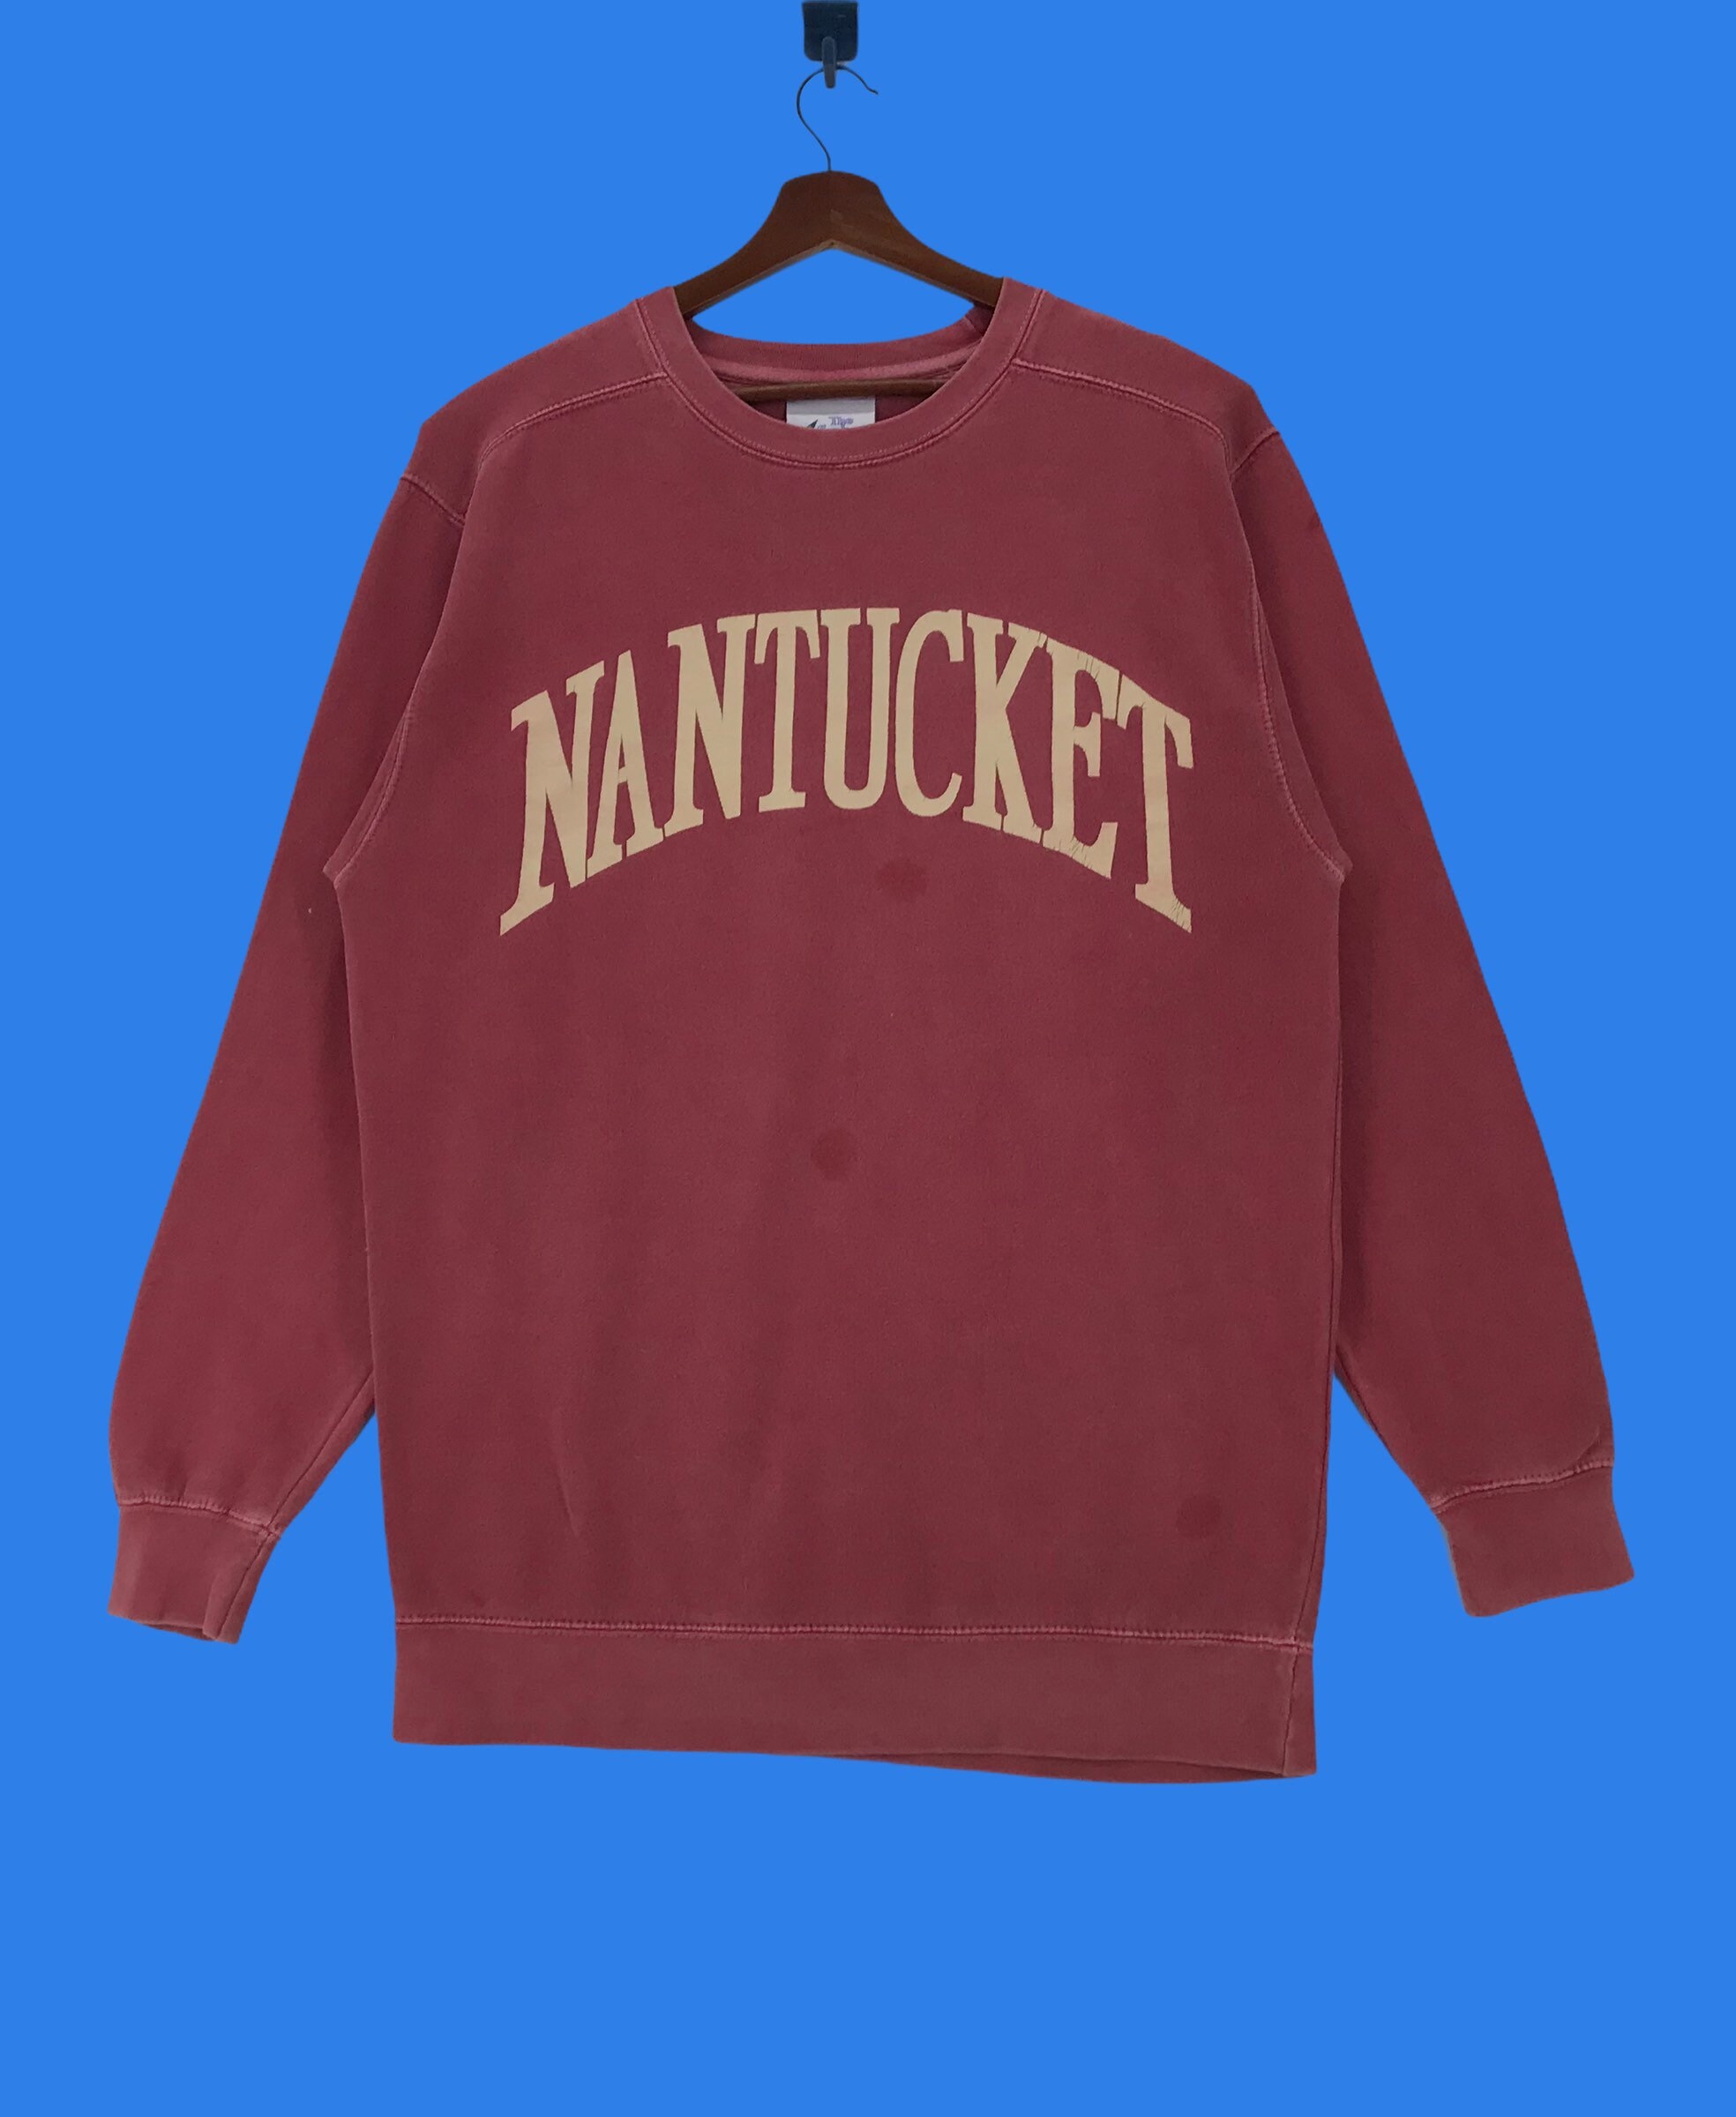 Nantucket Big Red